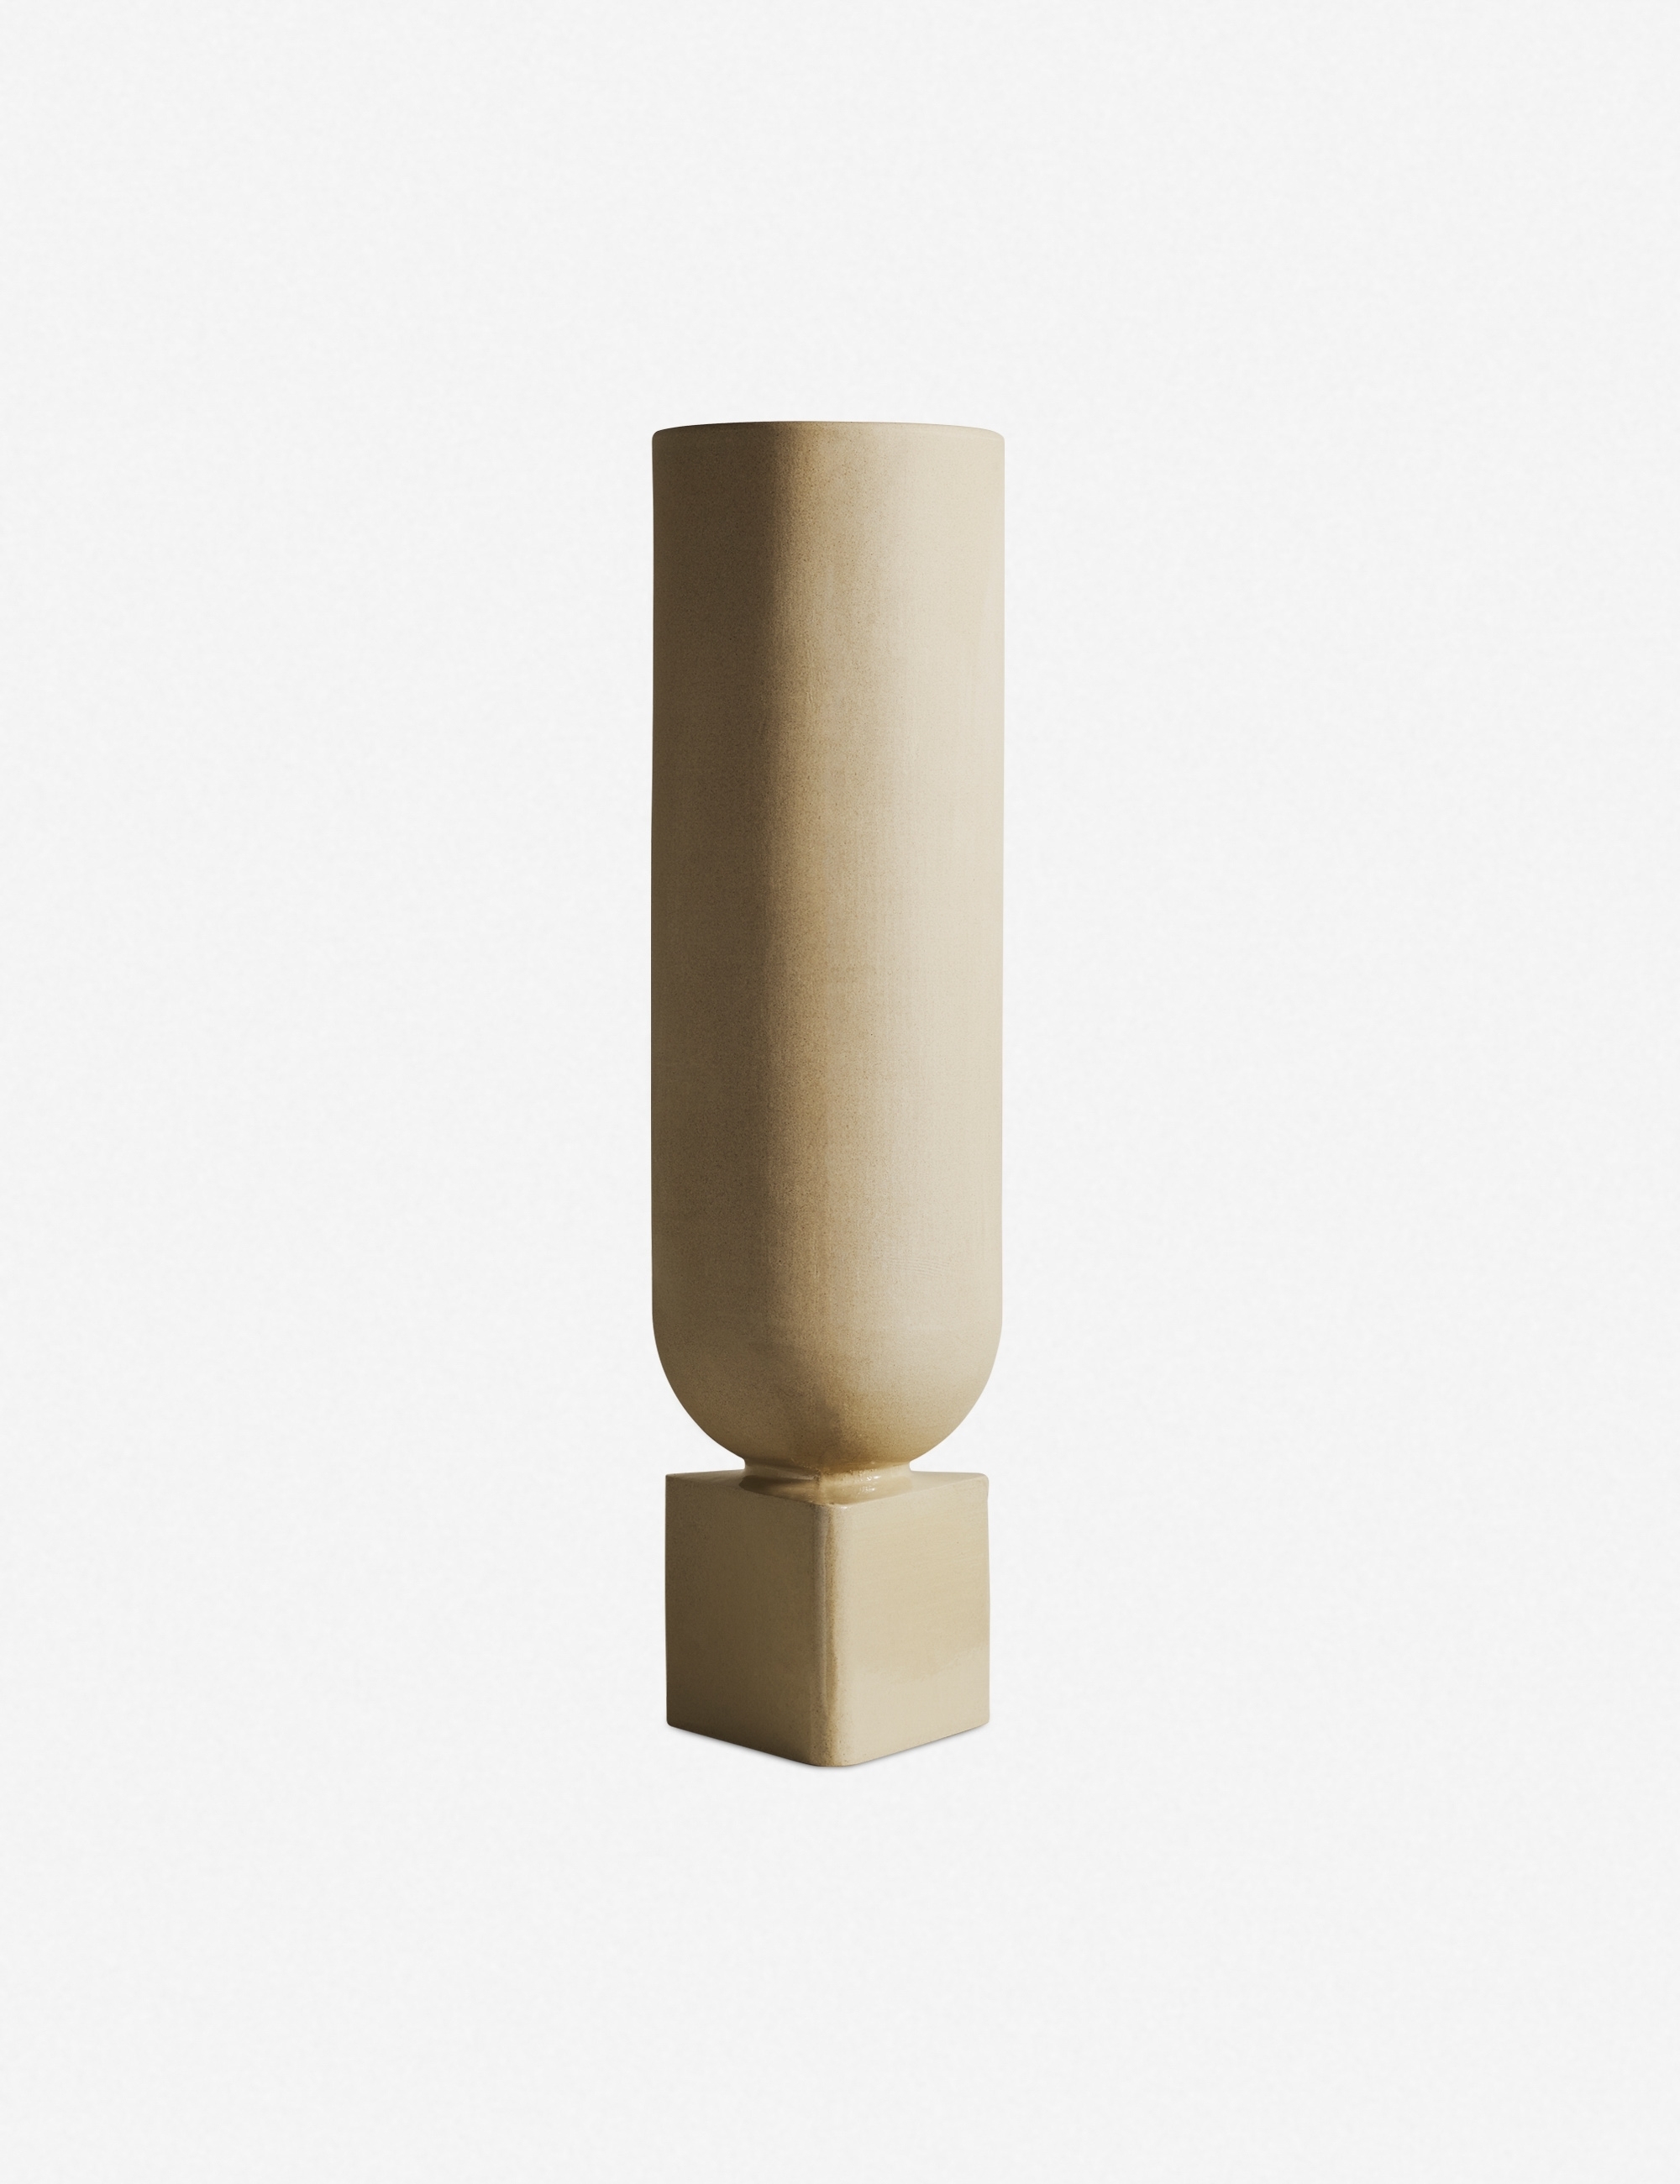 Tava Decorative Vase by Light + Ladder - Image 1